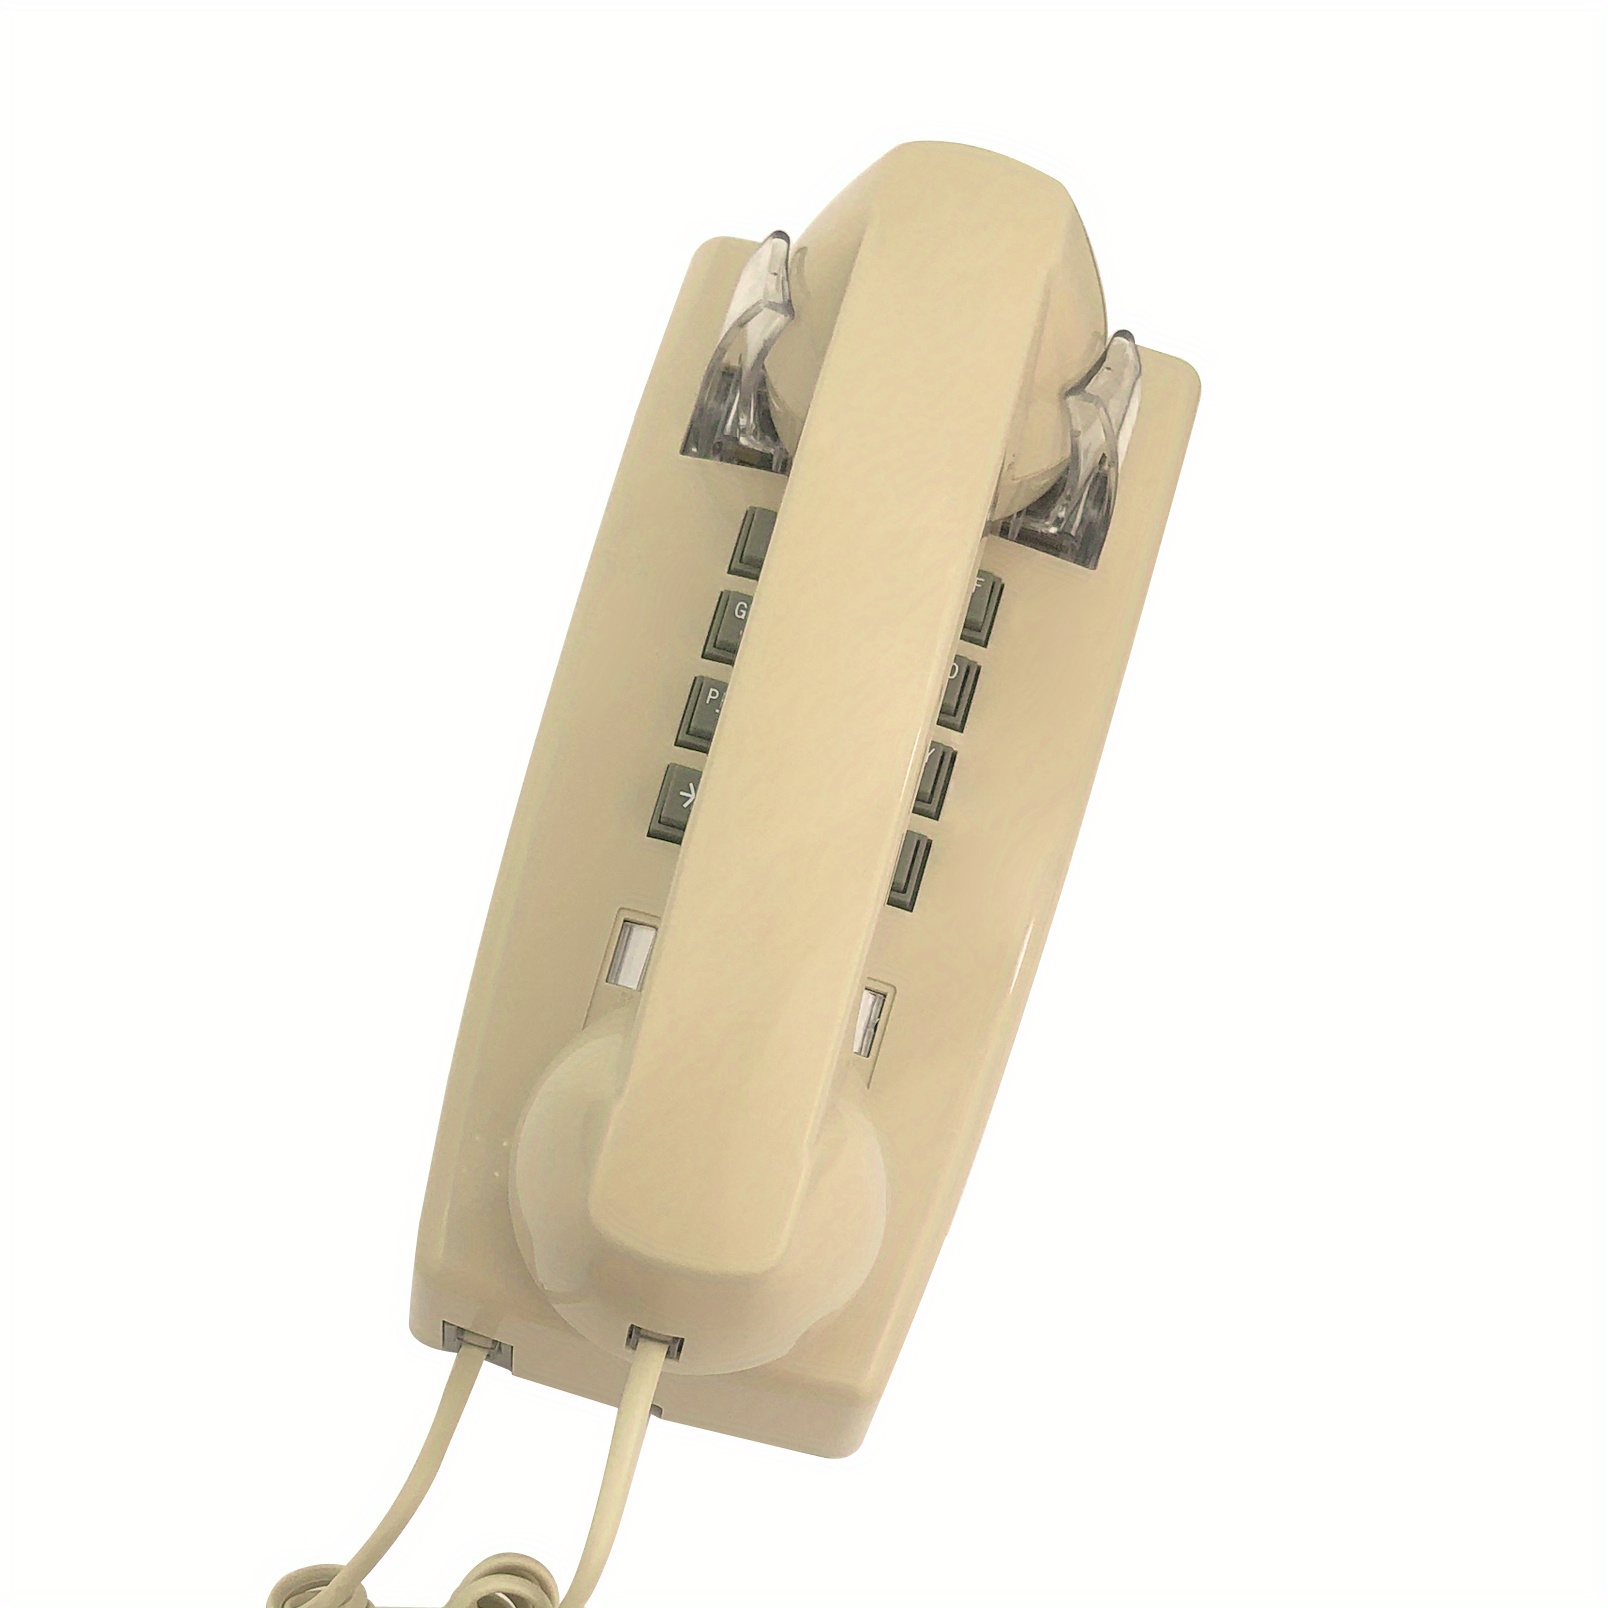  Sangyn Teléfono fijo para el hogar Trimline Teléfonos de pared  con cable con control de volumen para personas mayores, teléfono analógico  con botón grande para casa, oficina, escuela : Productos de